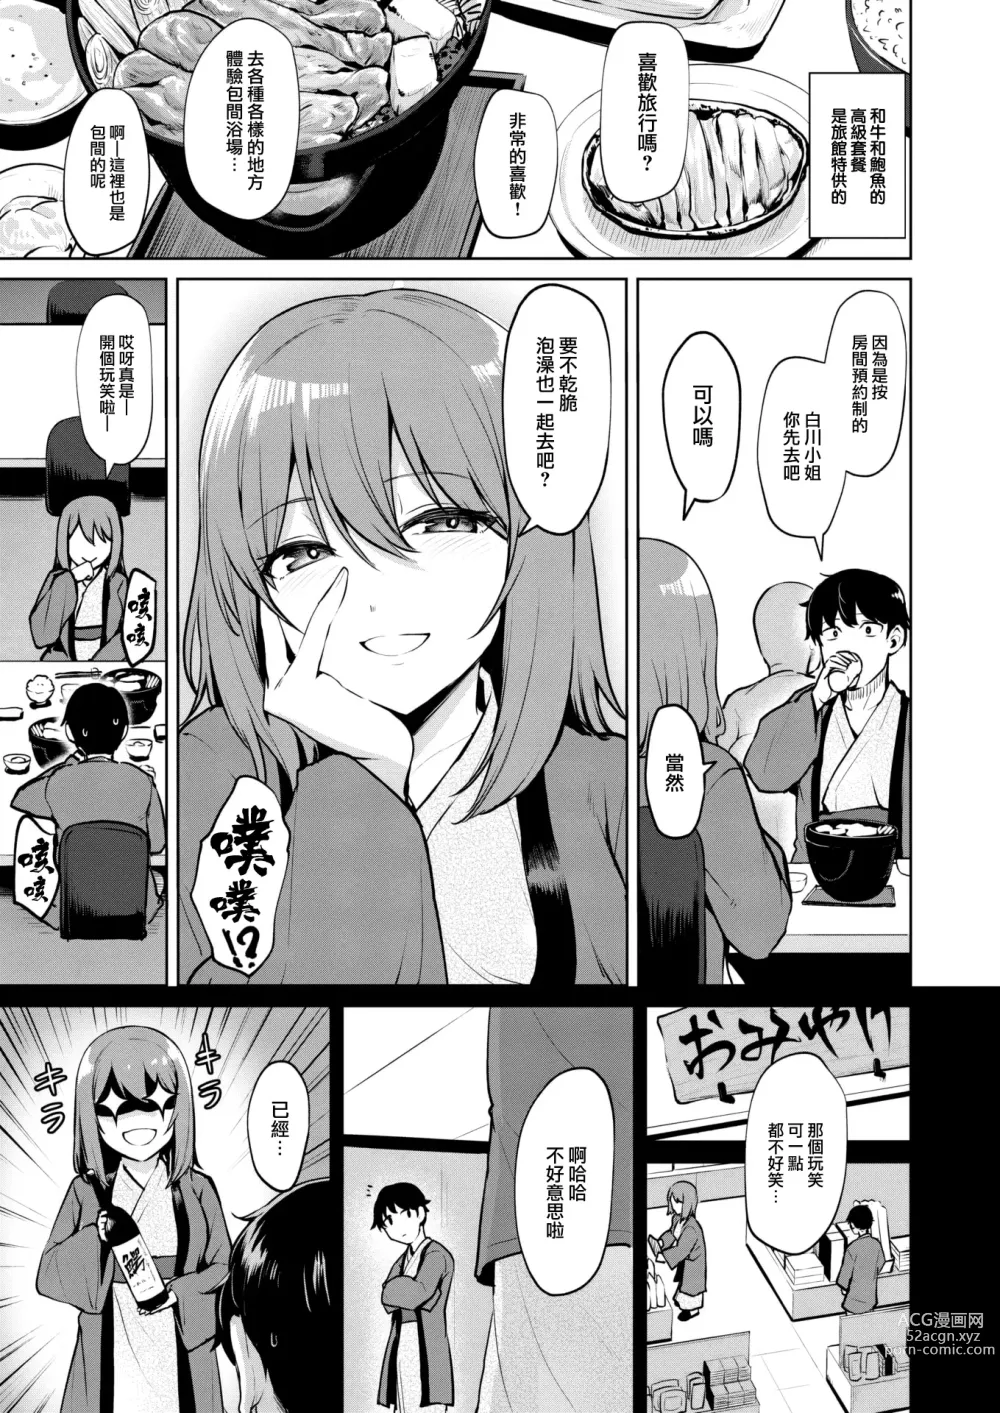 Page 6 of manga Shinnmitsu